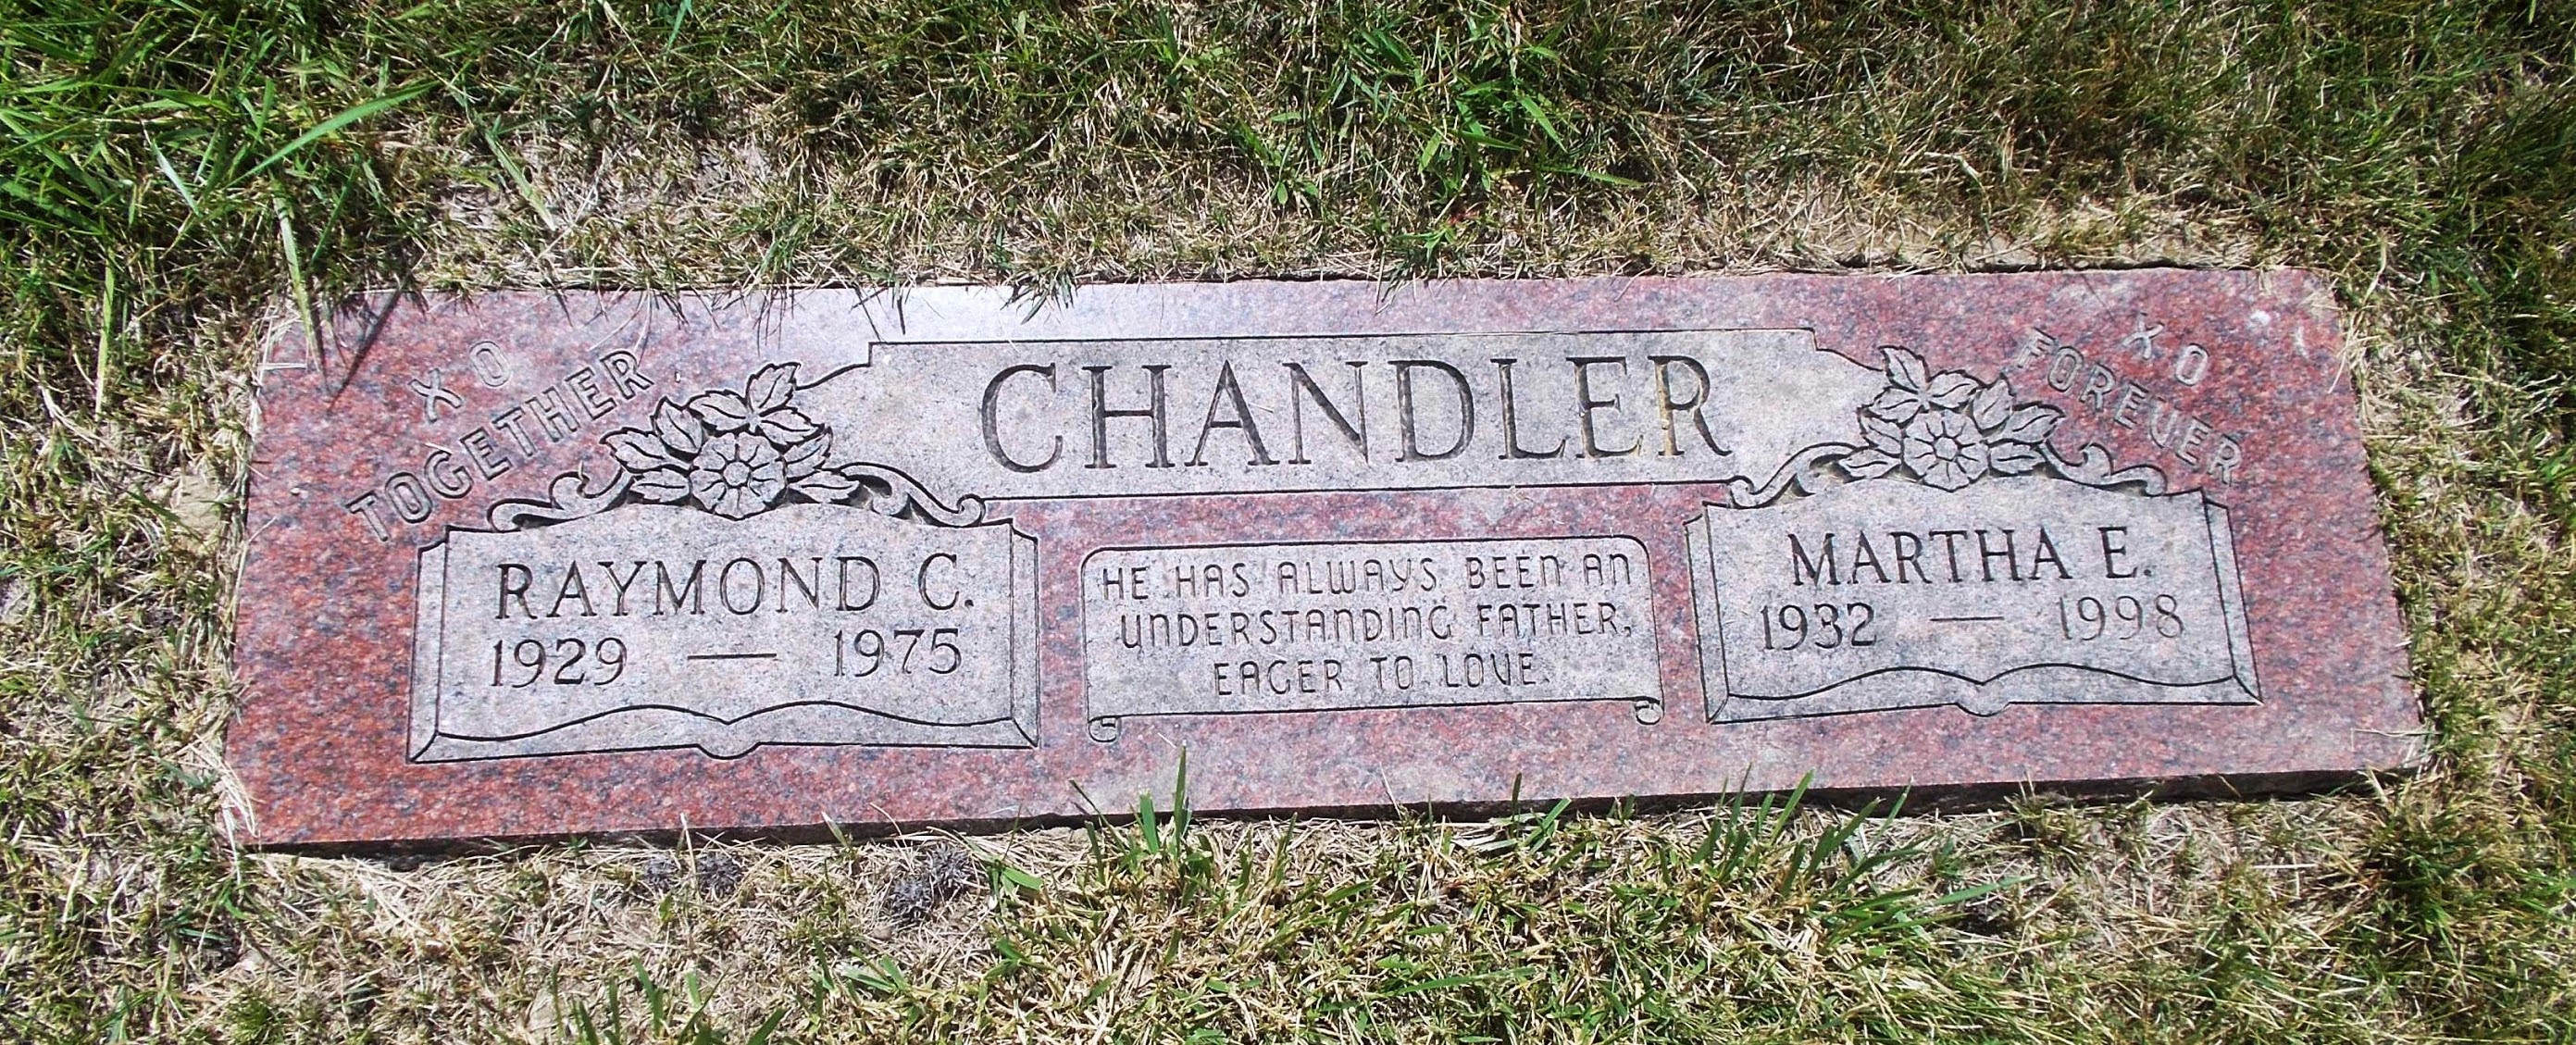 Raymond C Chandler